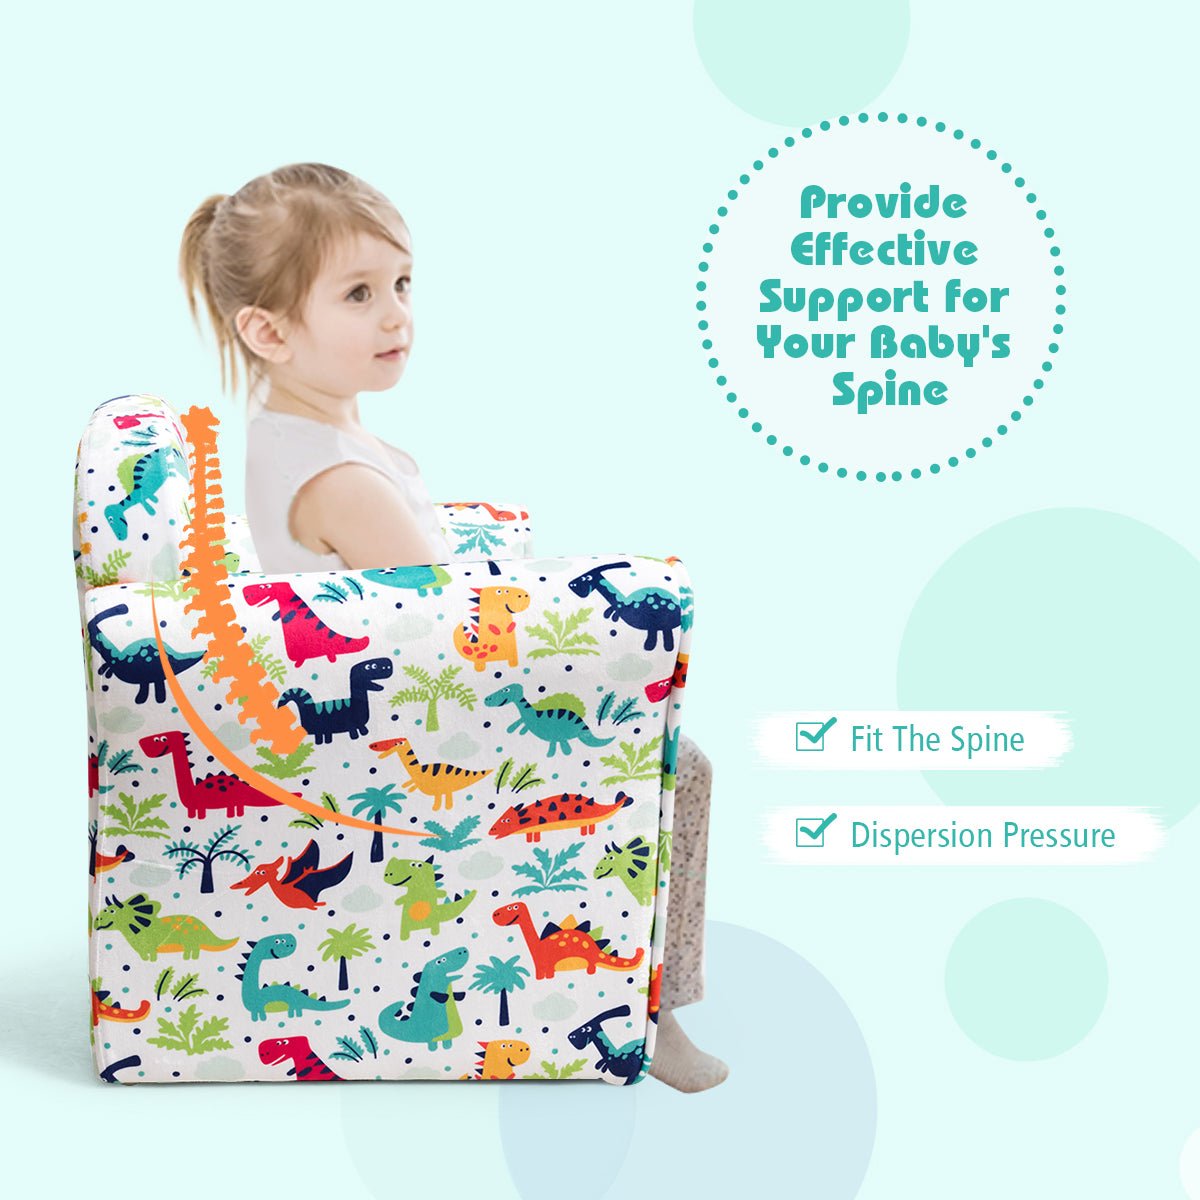 Velvet Kids Sofa in Cute Pattern: Infuse Comfort into Baby's Room